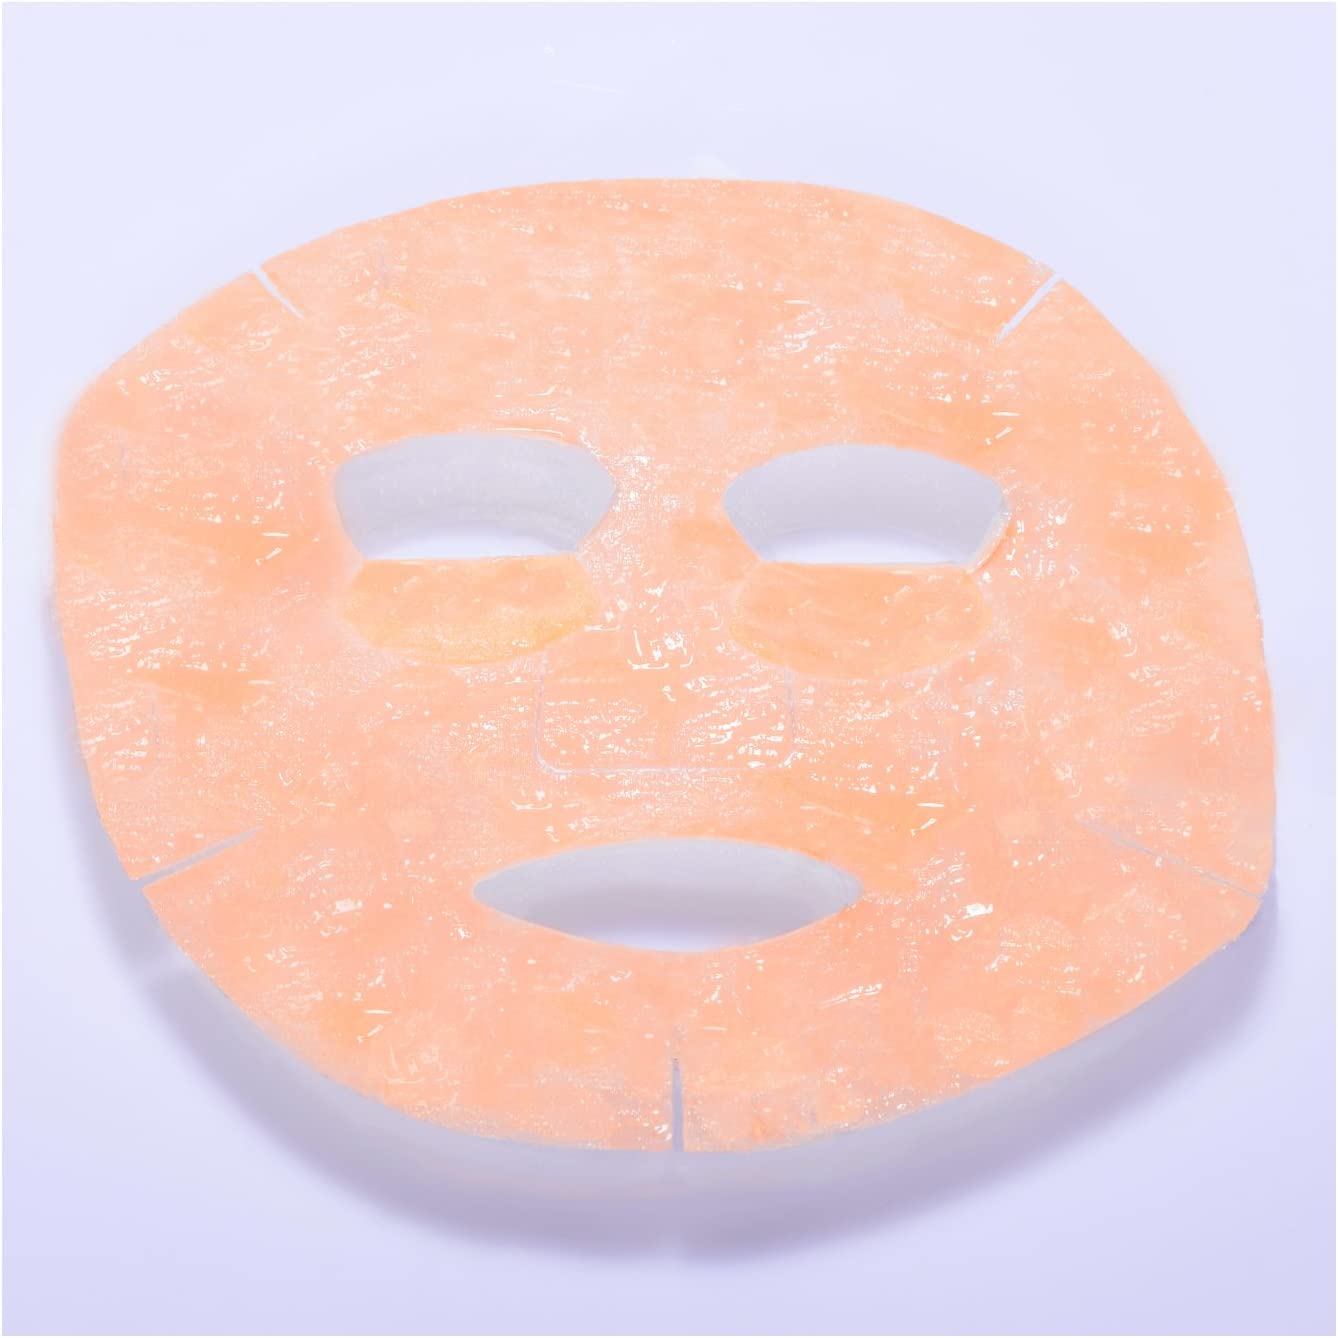 Kose Clear Turn Moisturizing Jelly Mask 4pcs (Made in Japan)